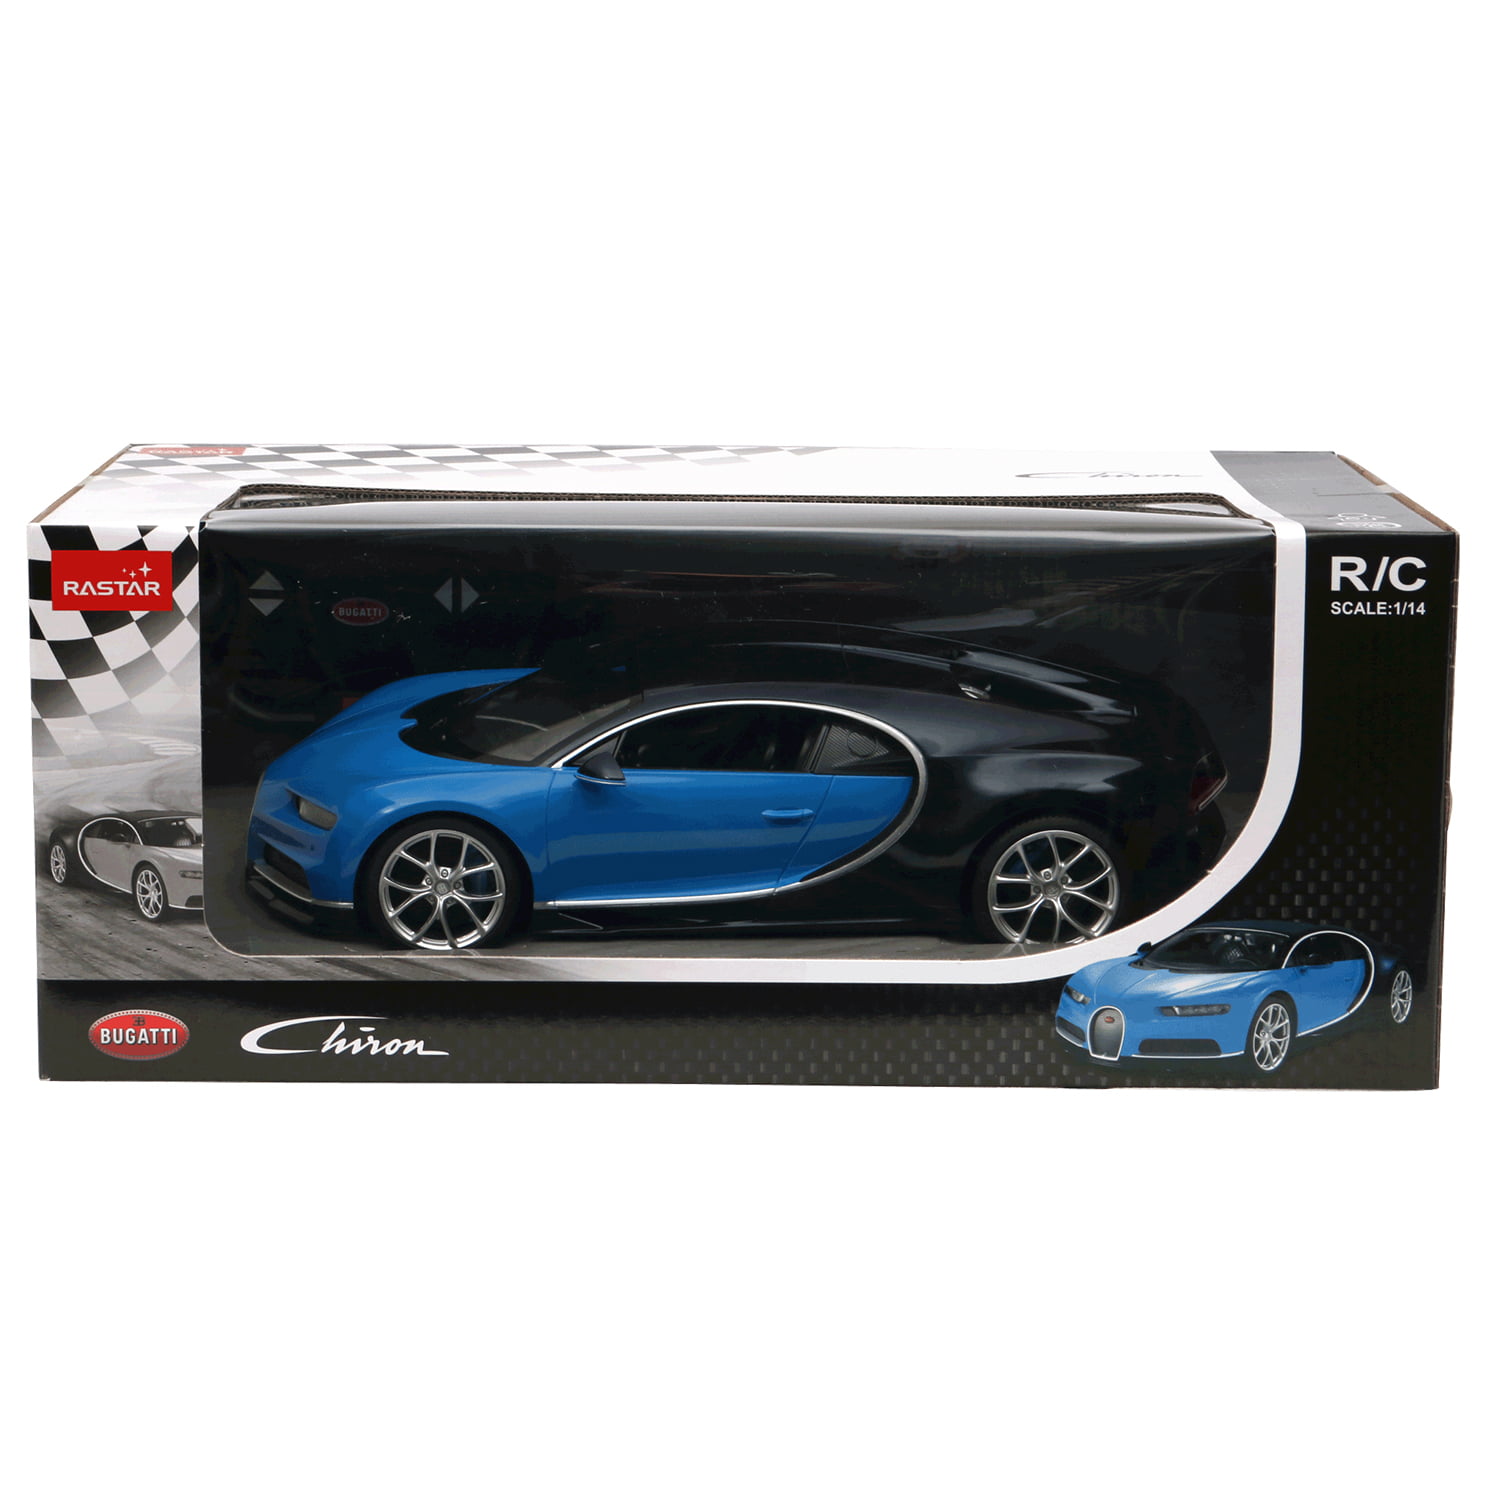 Rastar RC Bugatti noir 1:14 Voiture RC racing Radio remote control toy kids gift 